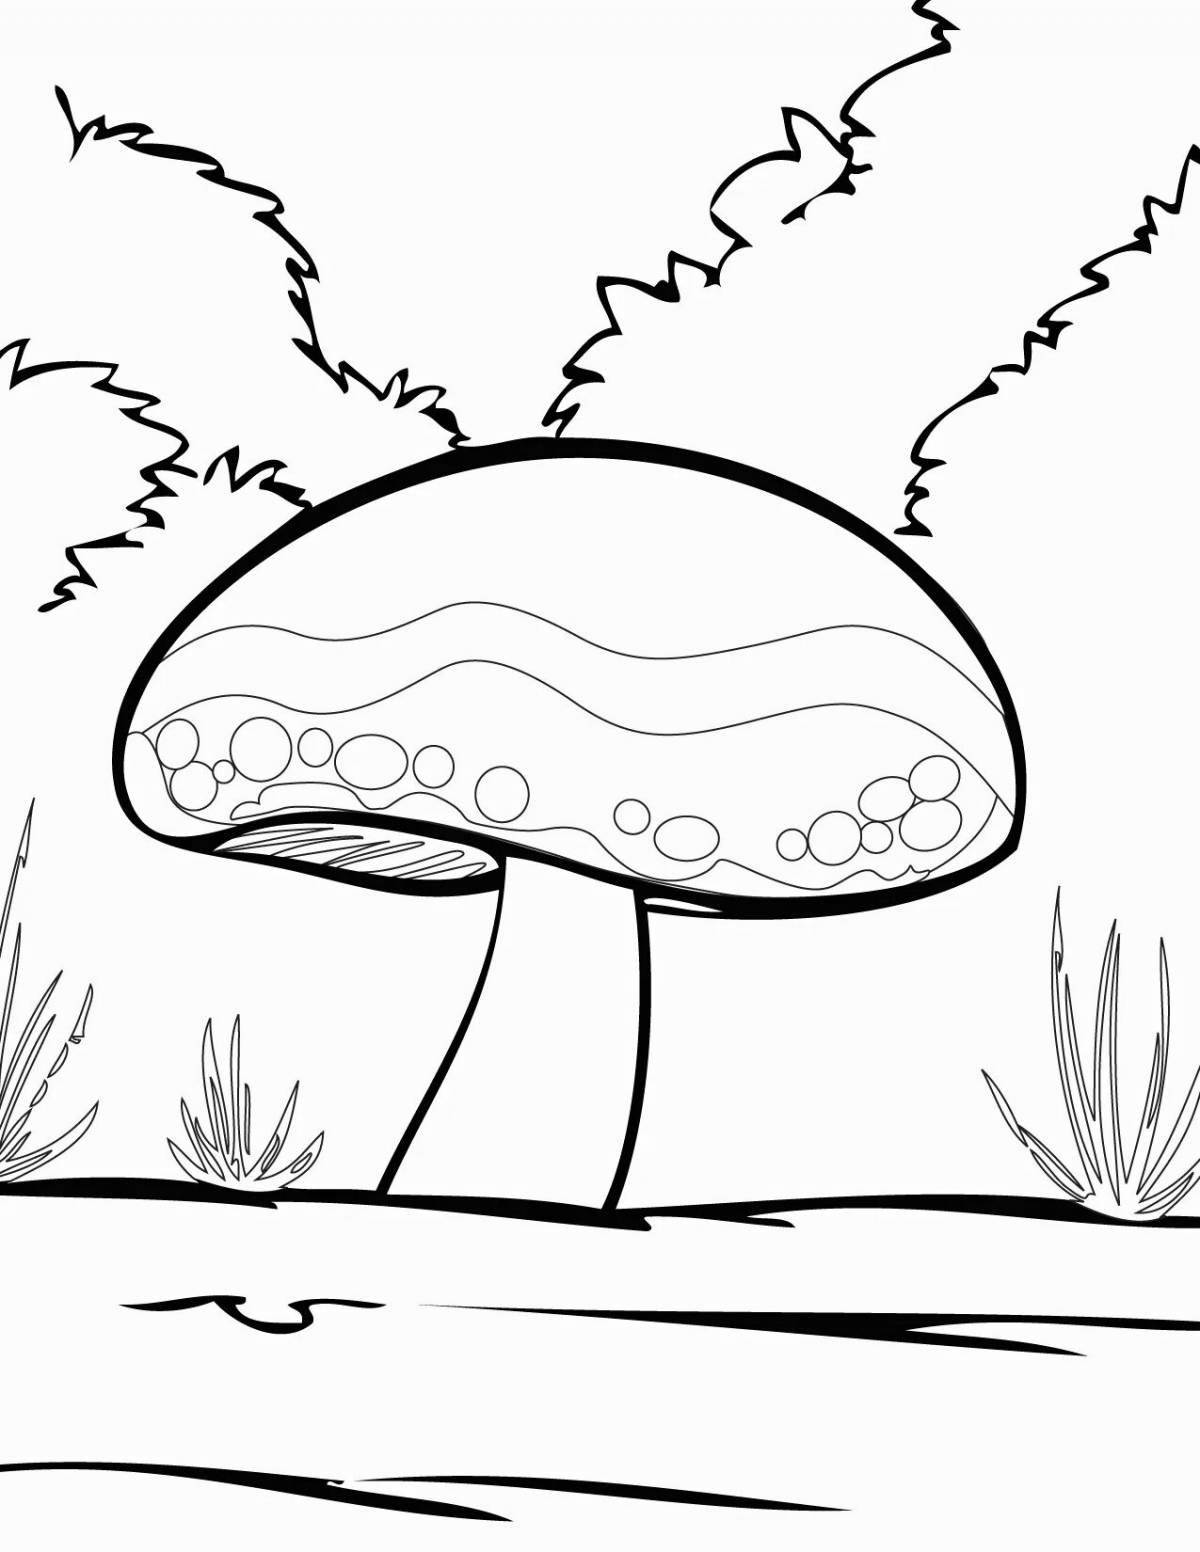 Magnificent toadstool mushrooms